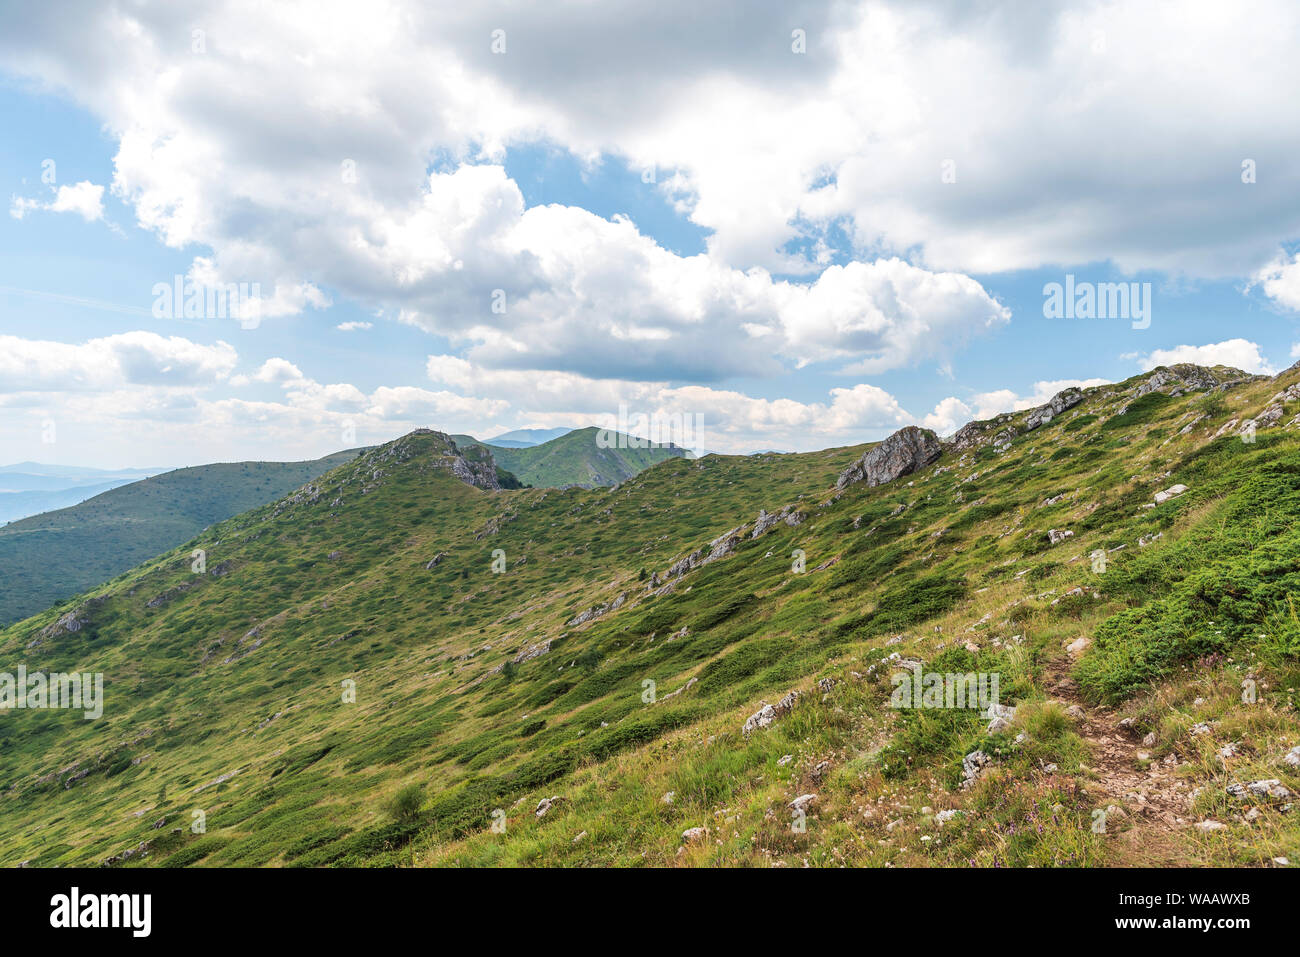 Summer in Central Balkan national park in Old mountain ( Stara planina ), Bulgaria. Panoramic breathtaking photo. Stock Photo